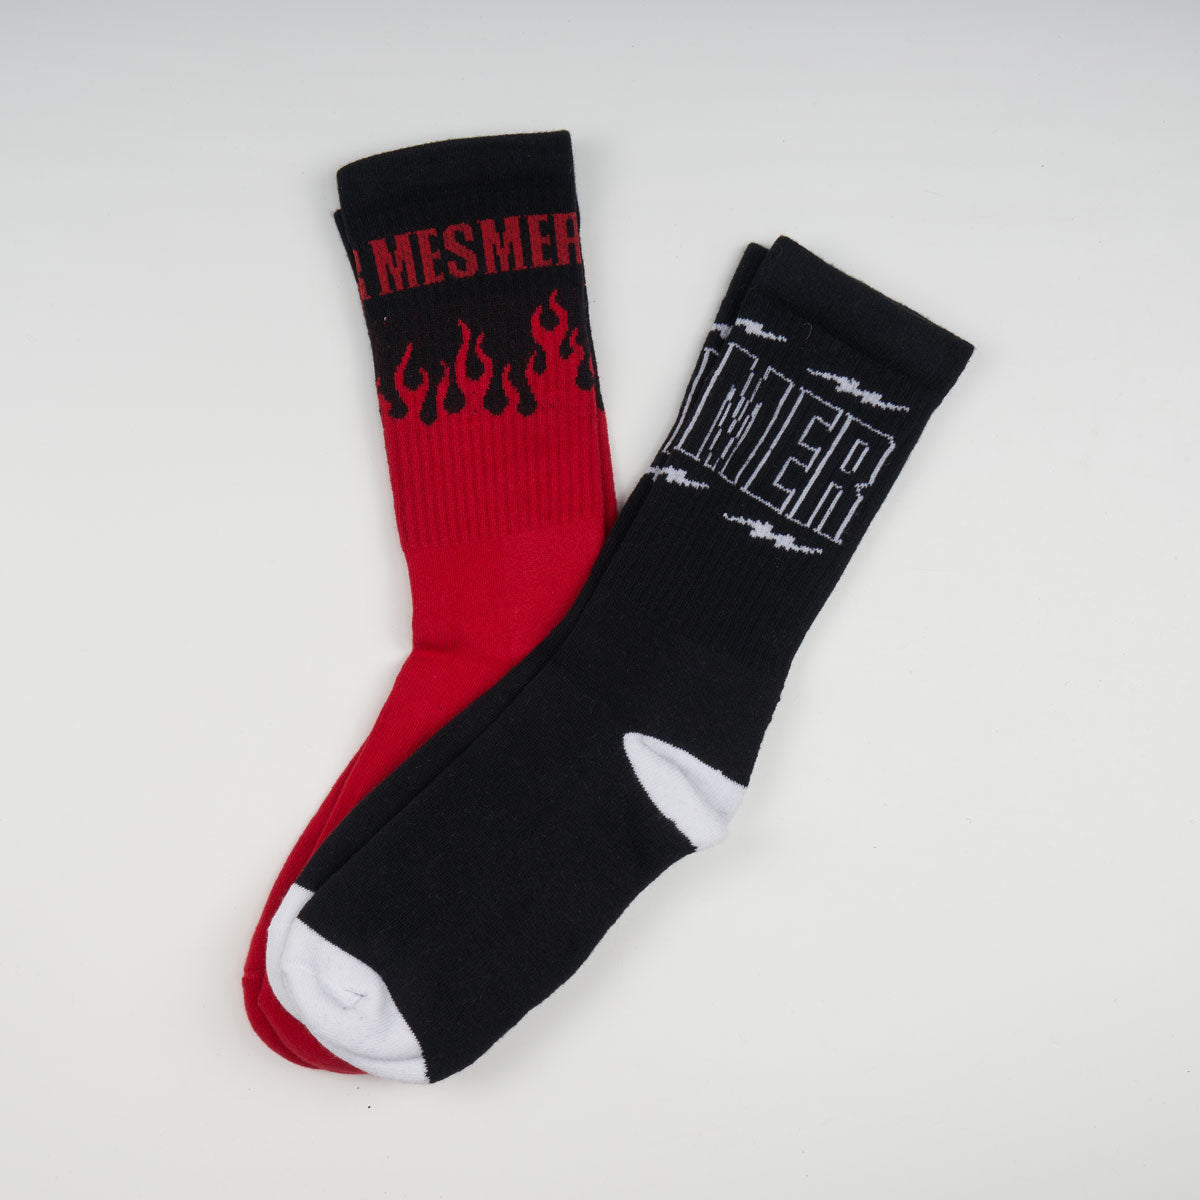 Mesmer Hots + Thunder Socks